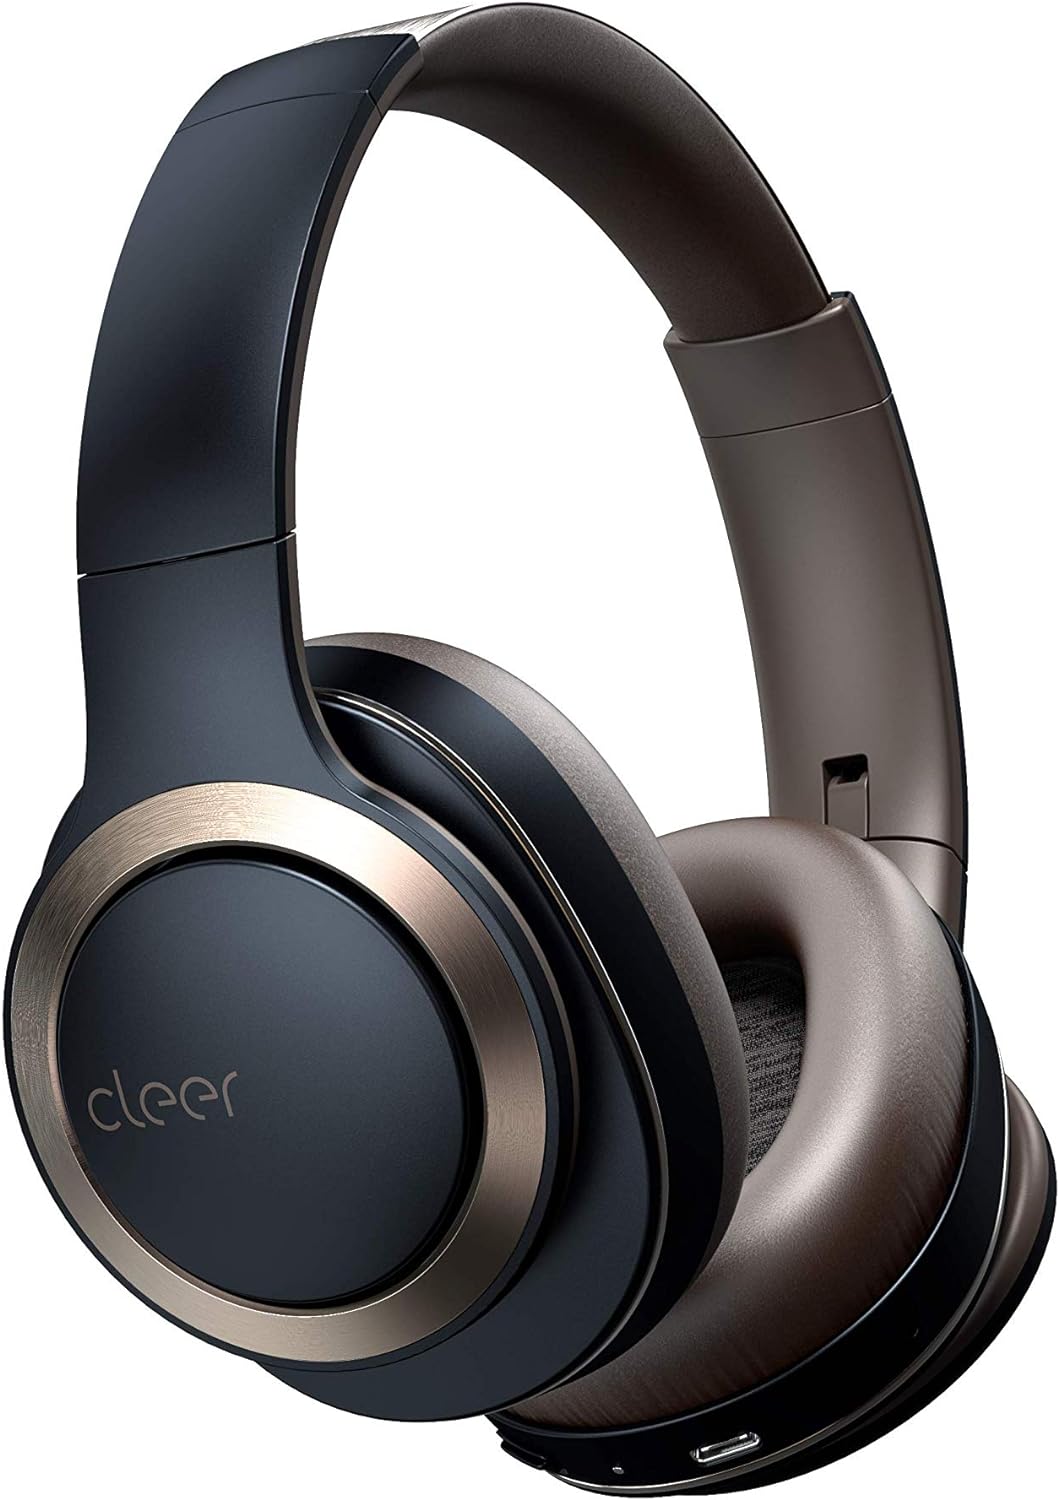 Cleer Audio Enduro ANC Headphones Review: Impressive Sound and Battery Life